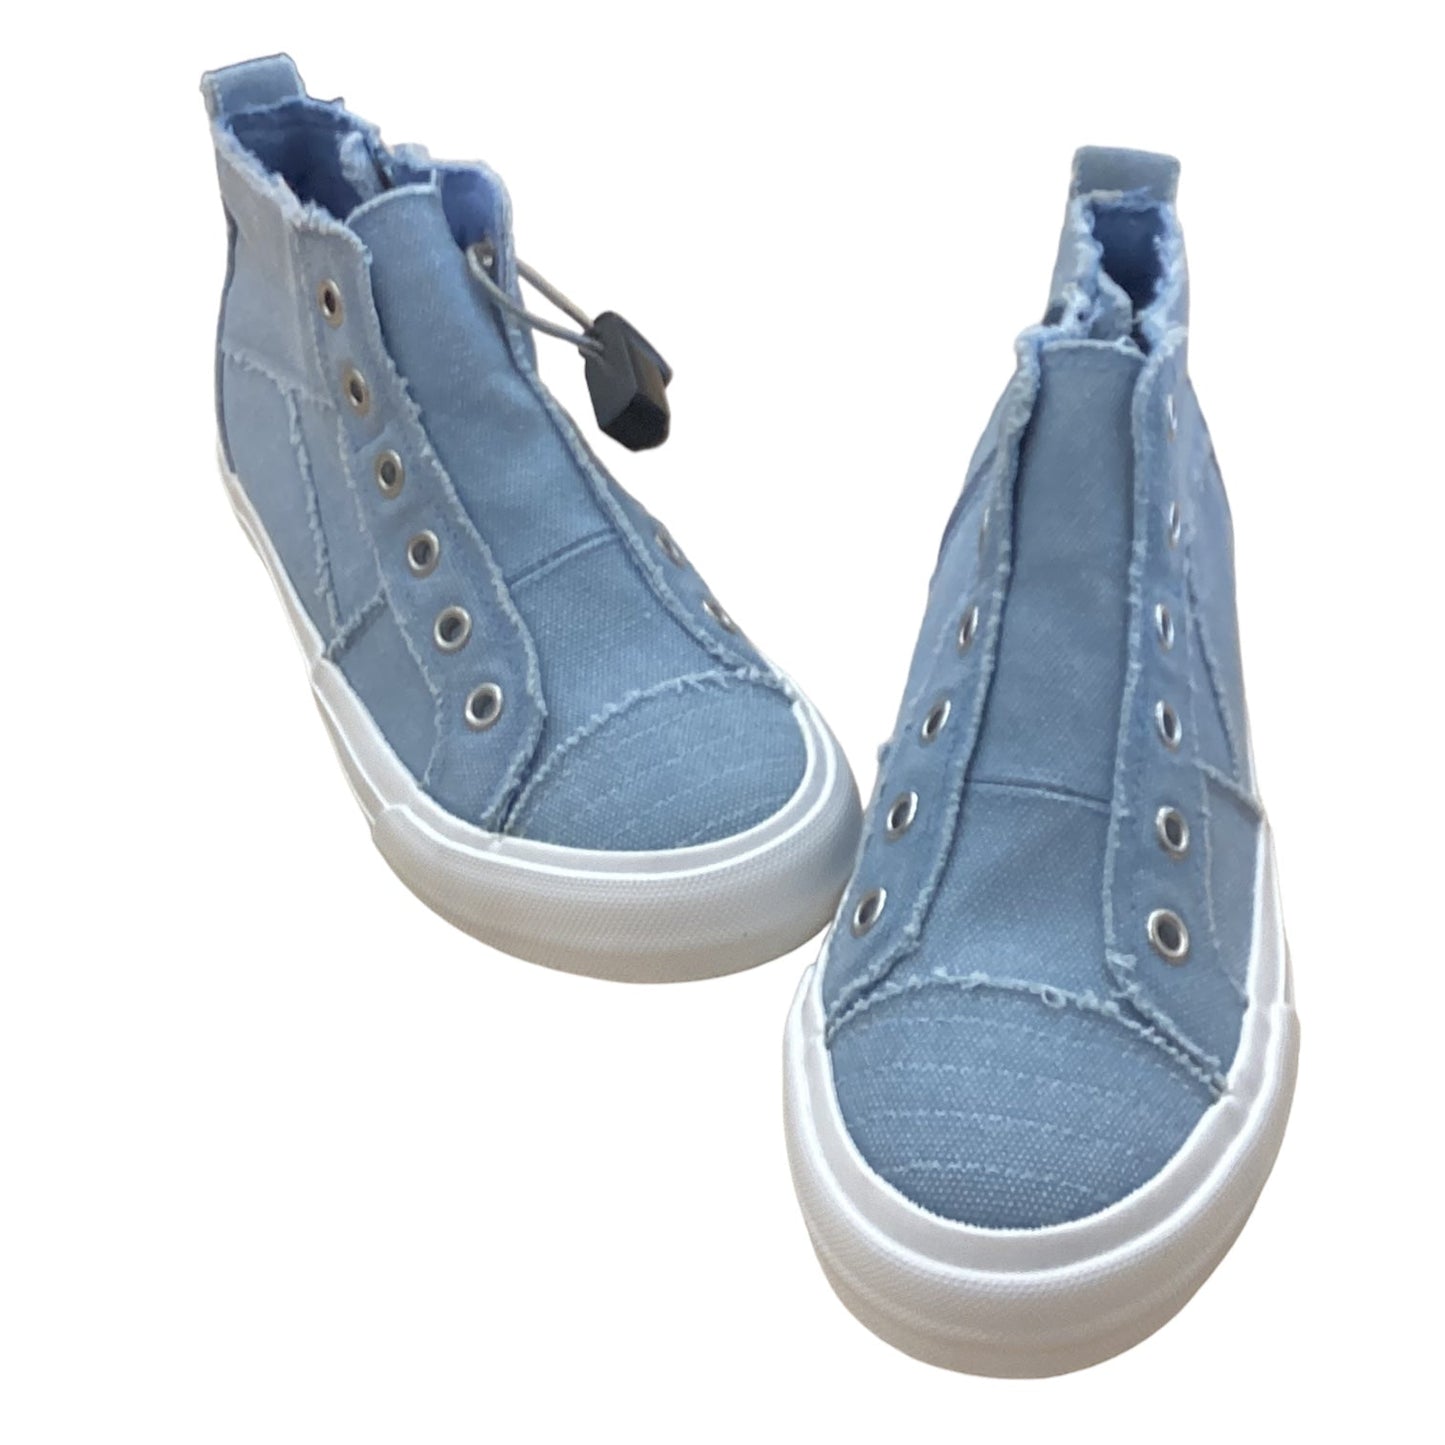 Blue Shoes Athletic Gypsy Jazz, Size 6